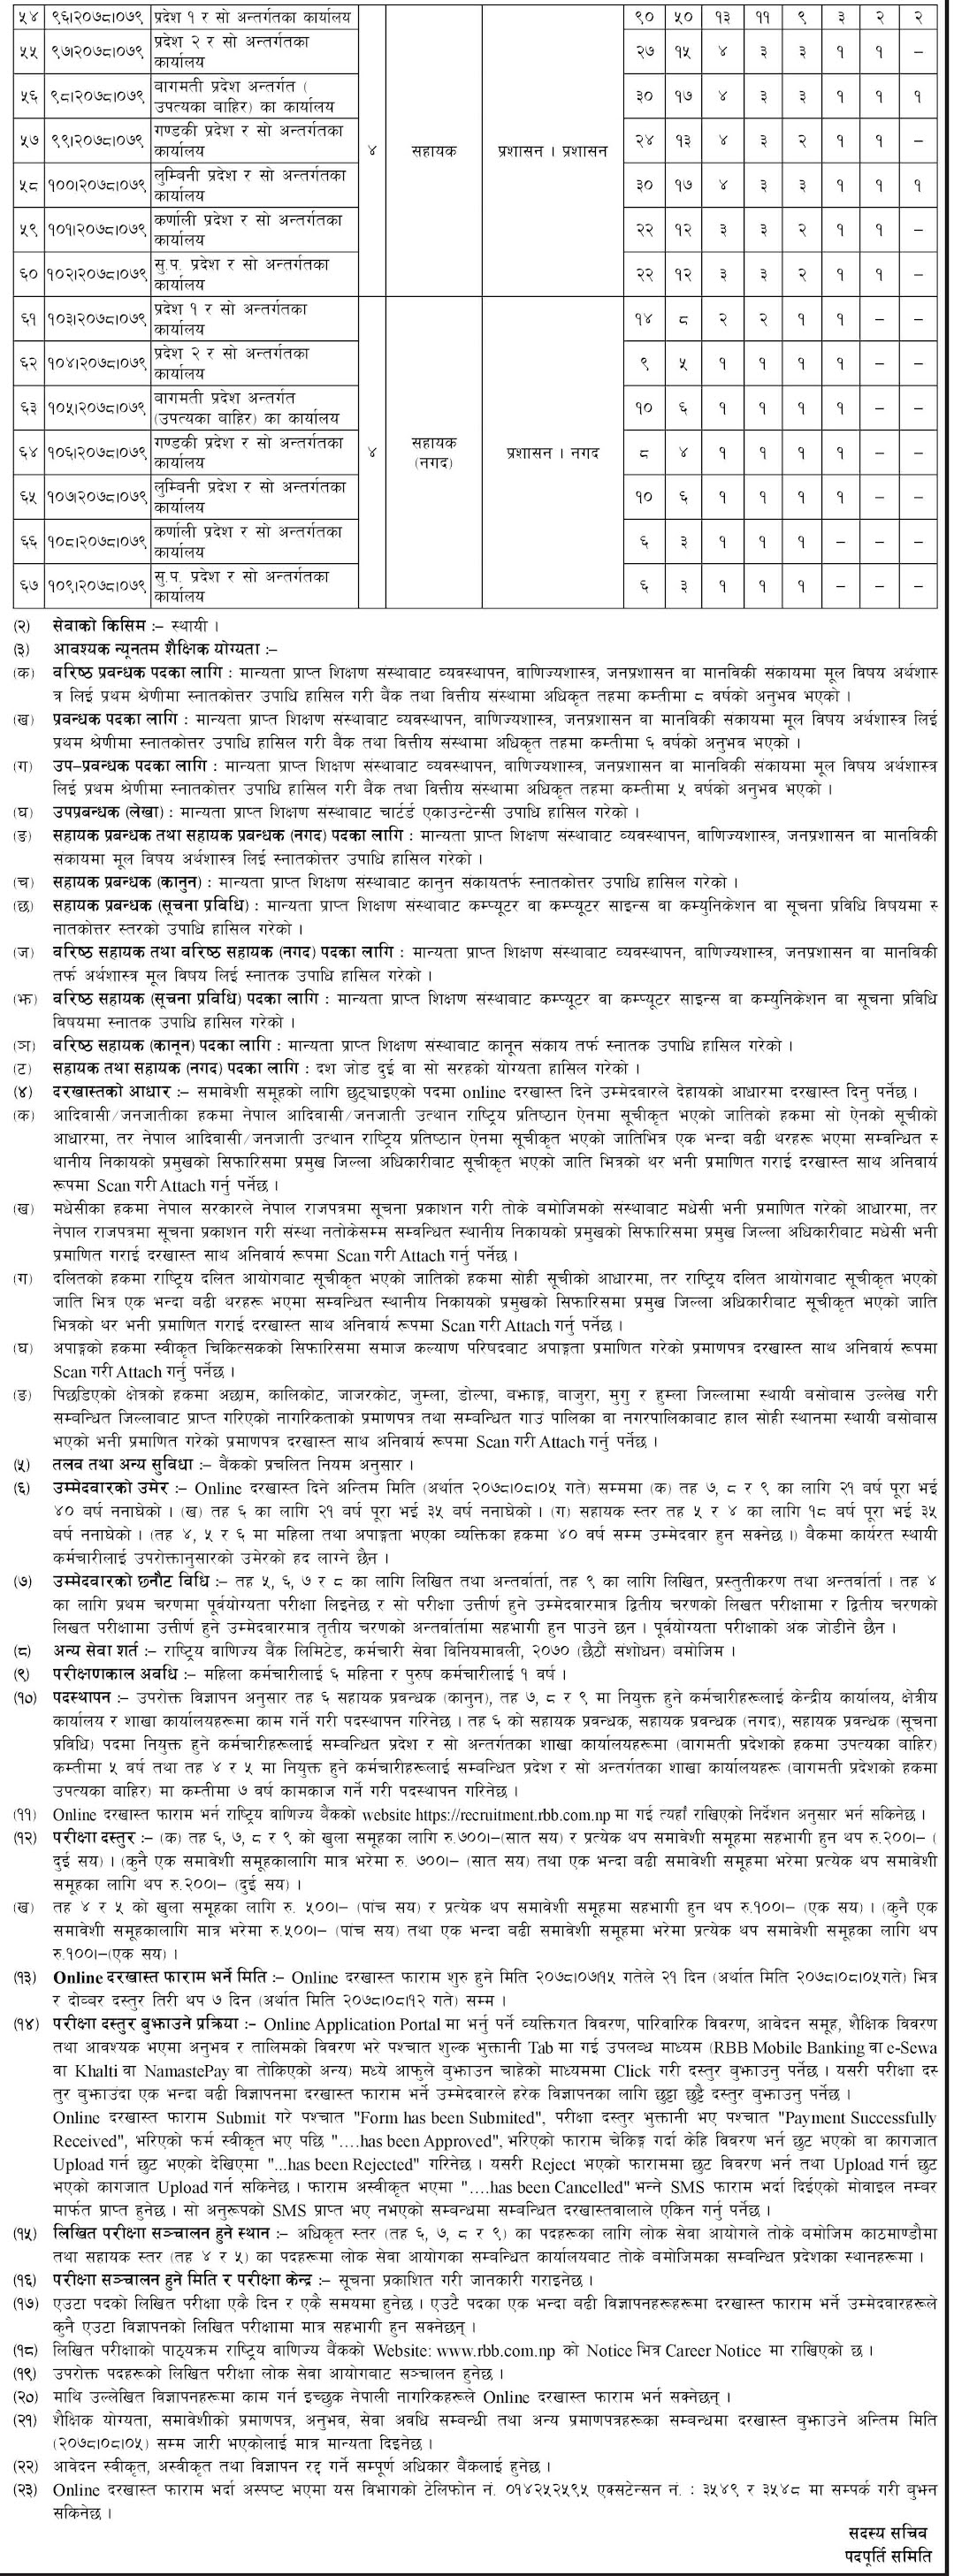 Job Vacancy in Rastriya Banijya Bank (RBB) For Various Post.